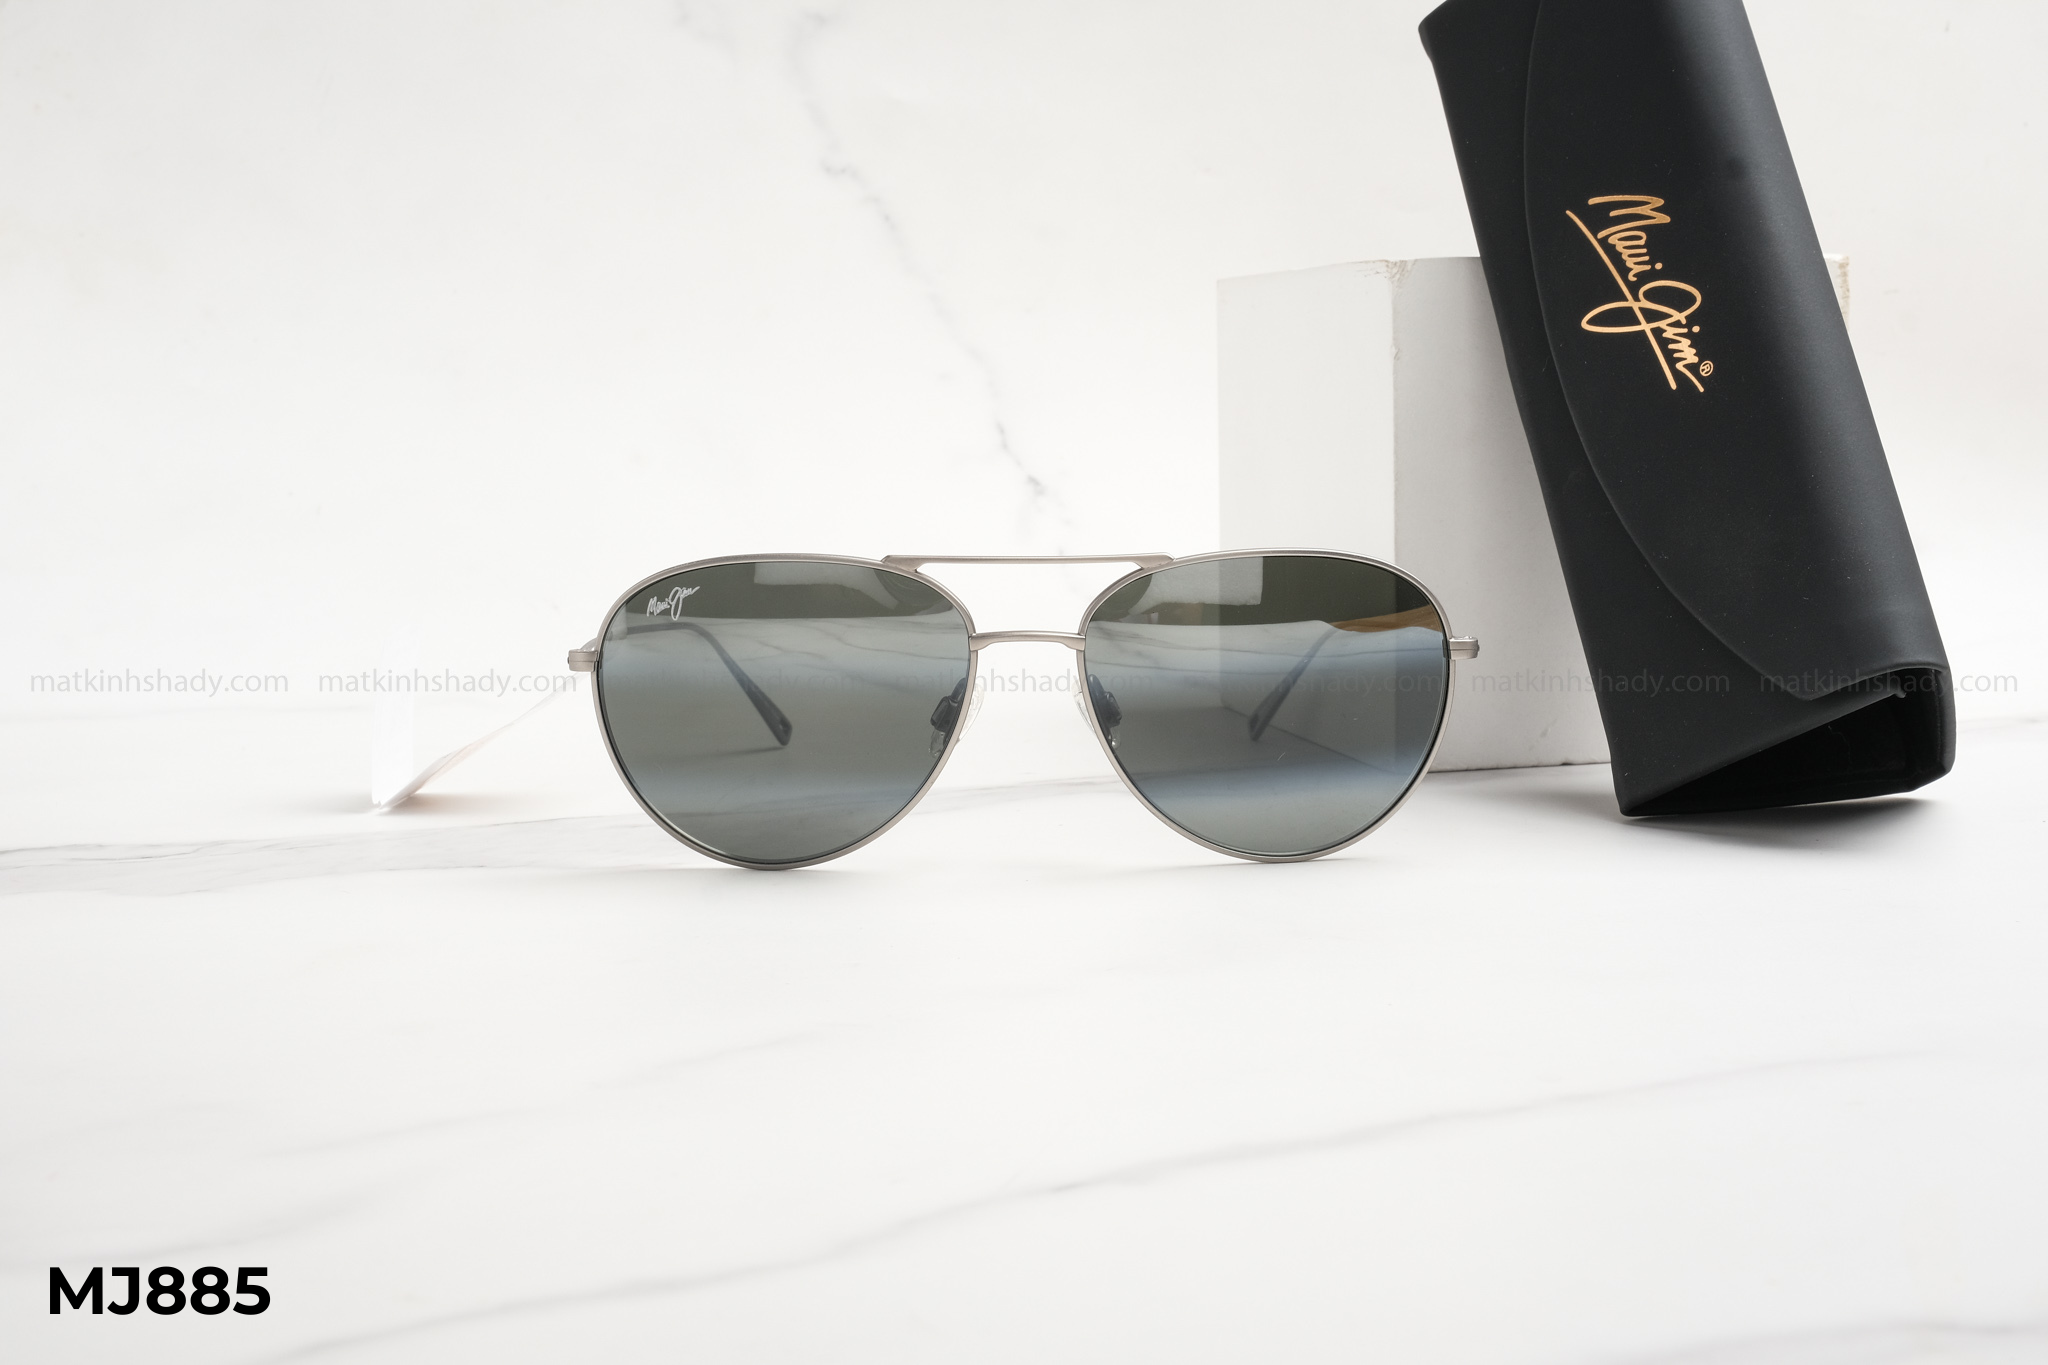  Maui Jim Eyewear - Sunglasses - MJ885 